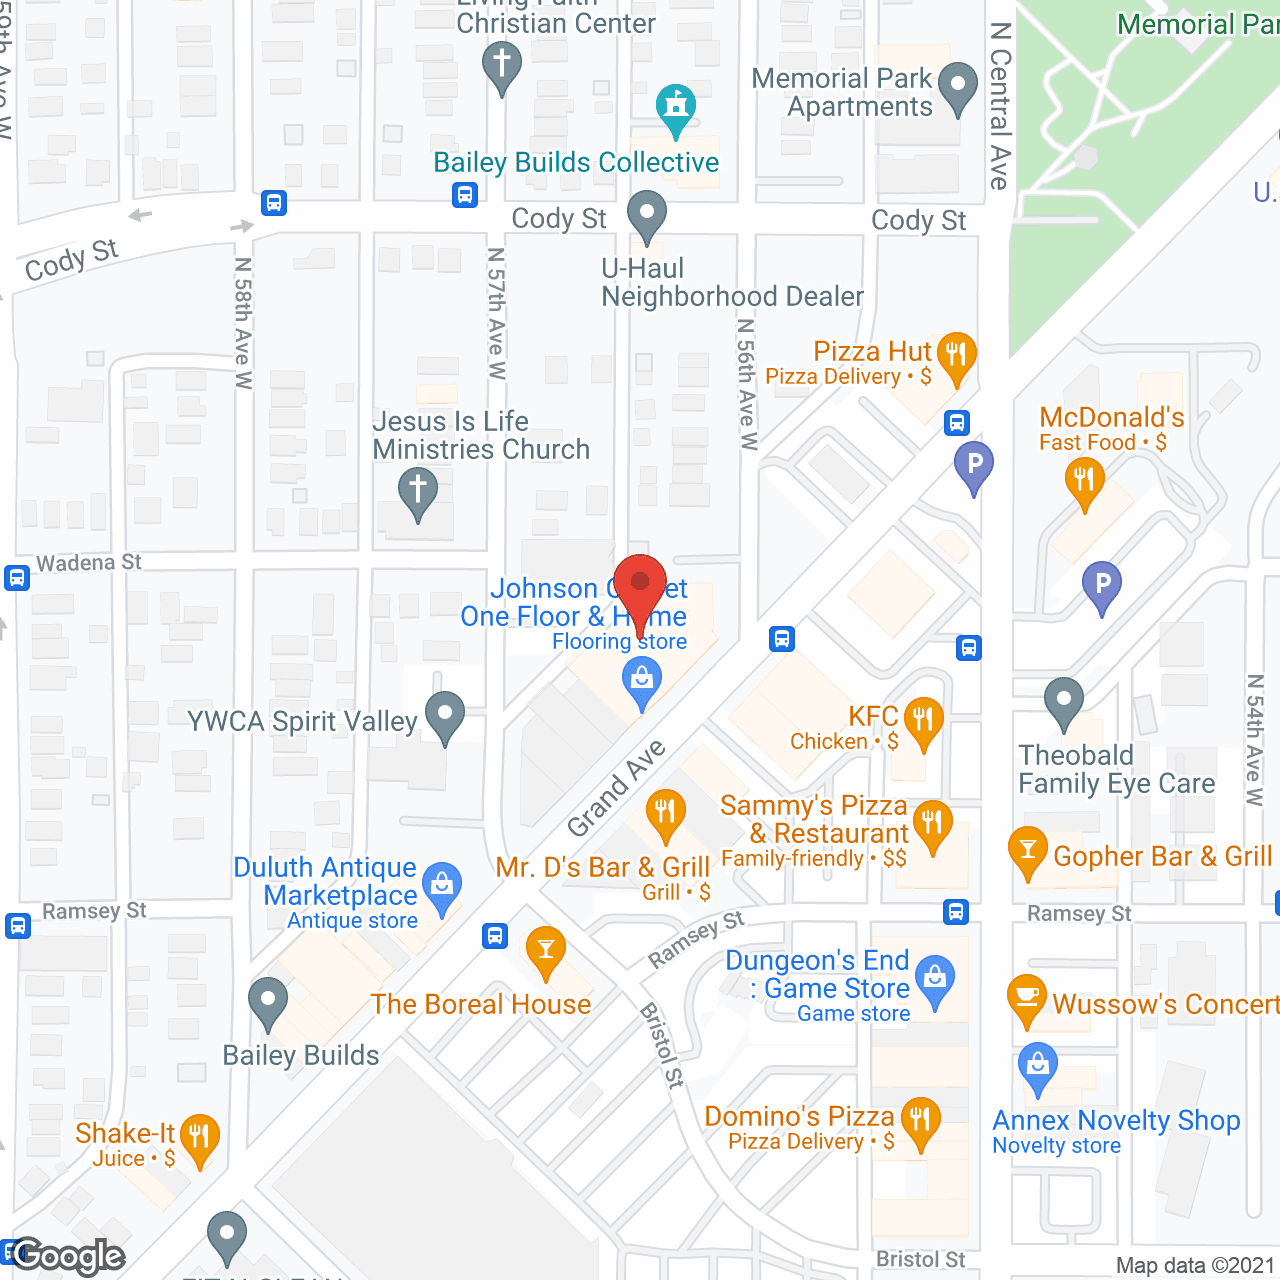 Wesley Residence in google map